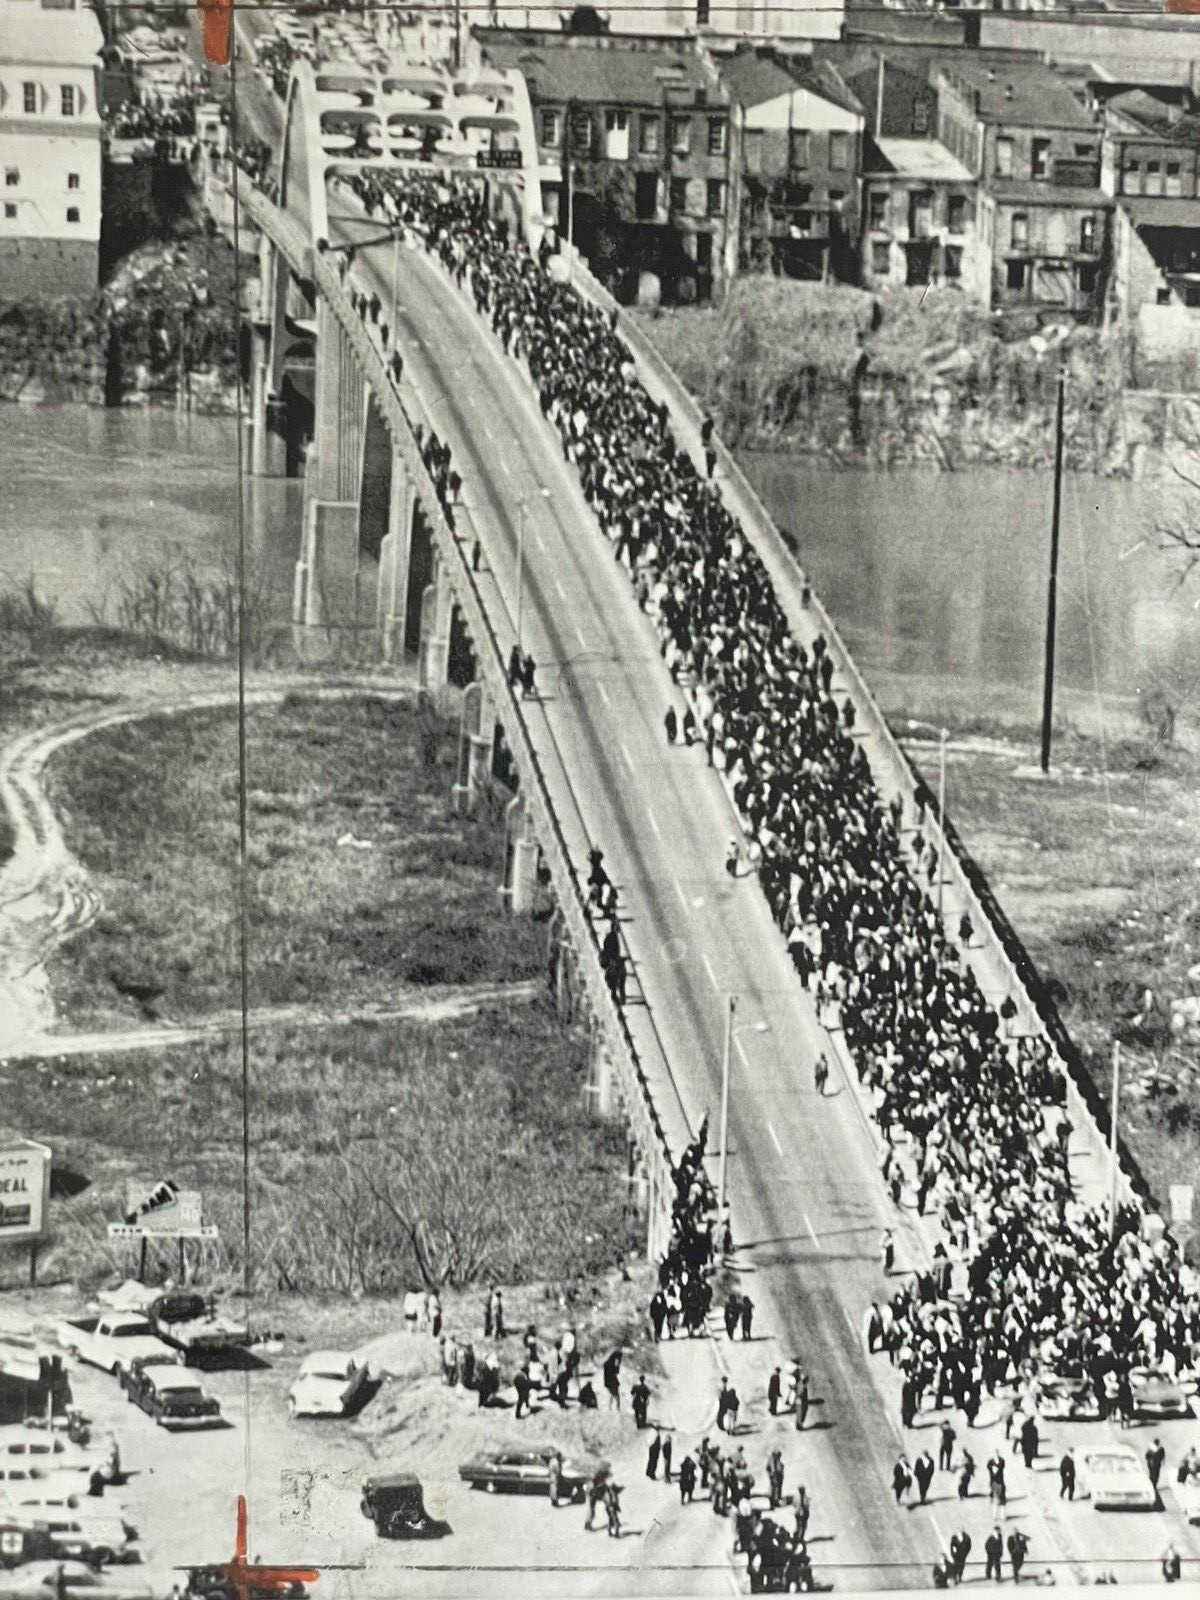 Martin Luther King Edmund Pettus Bridge Civil Rights 1965 #historyinpieces